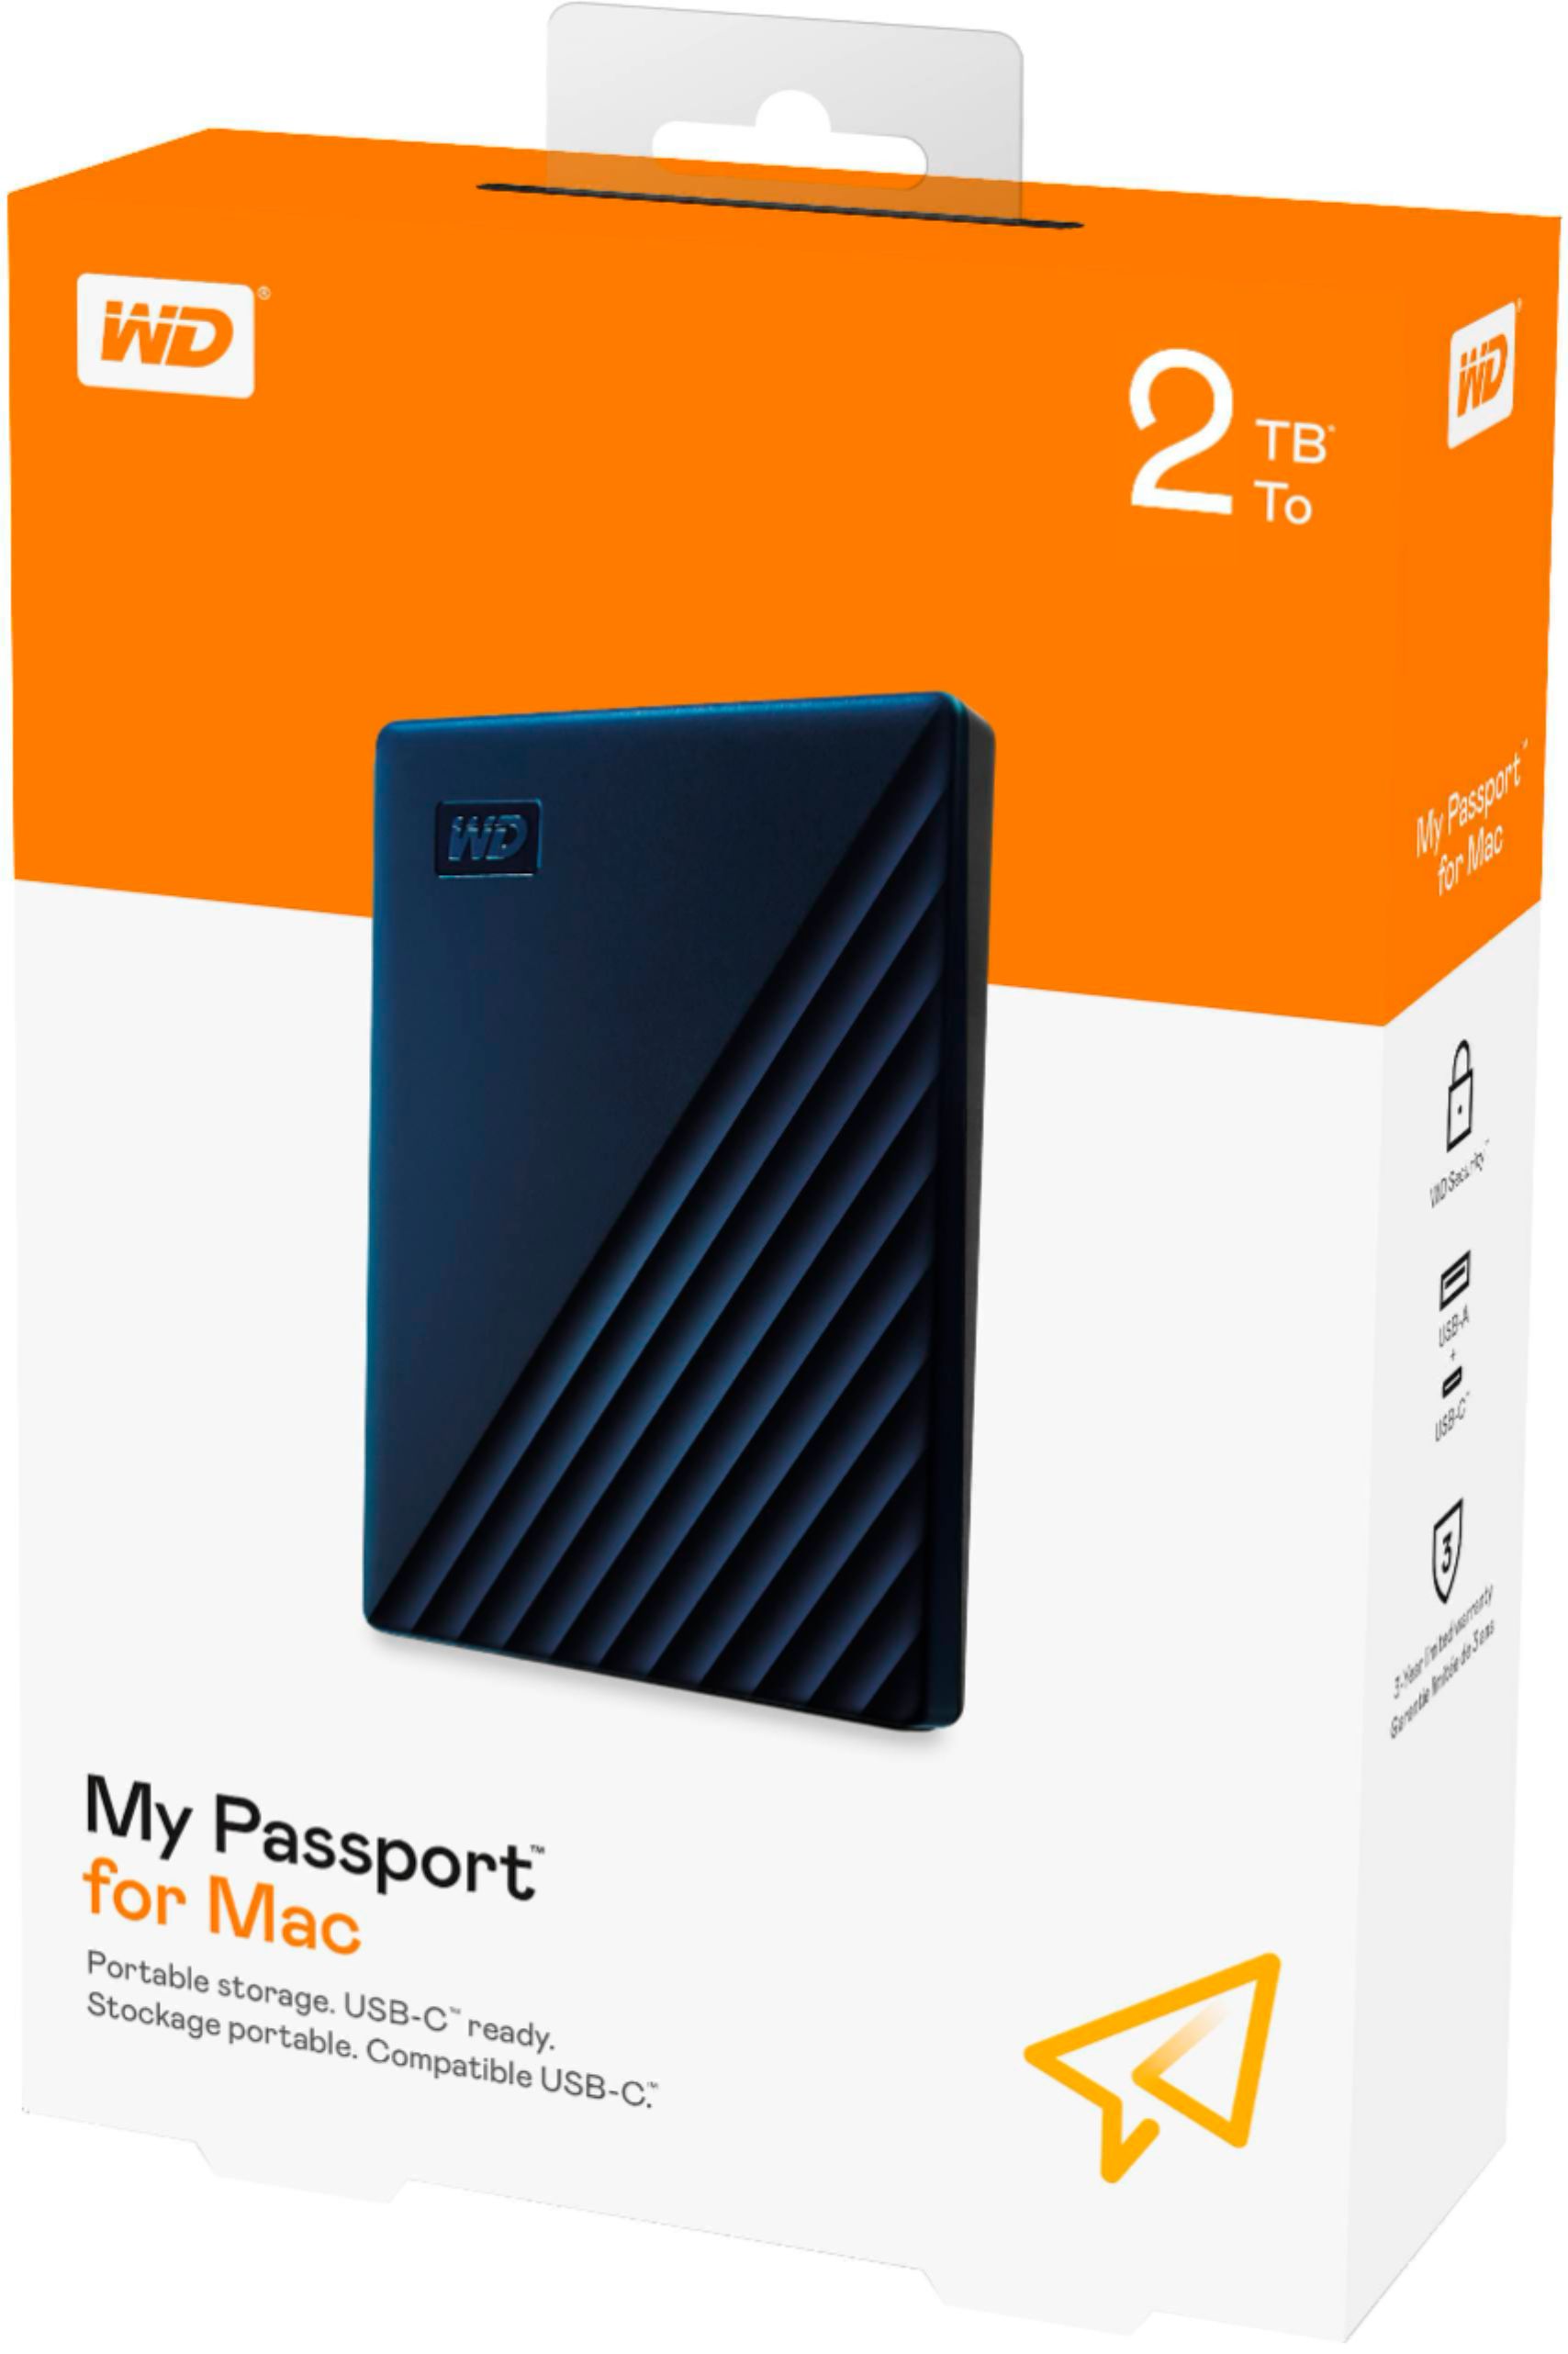 WD My Passport for Mac 2TB External USB 3.0 Portable Hard Drive